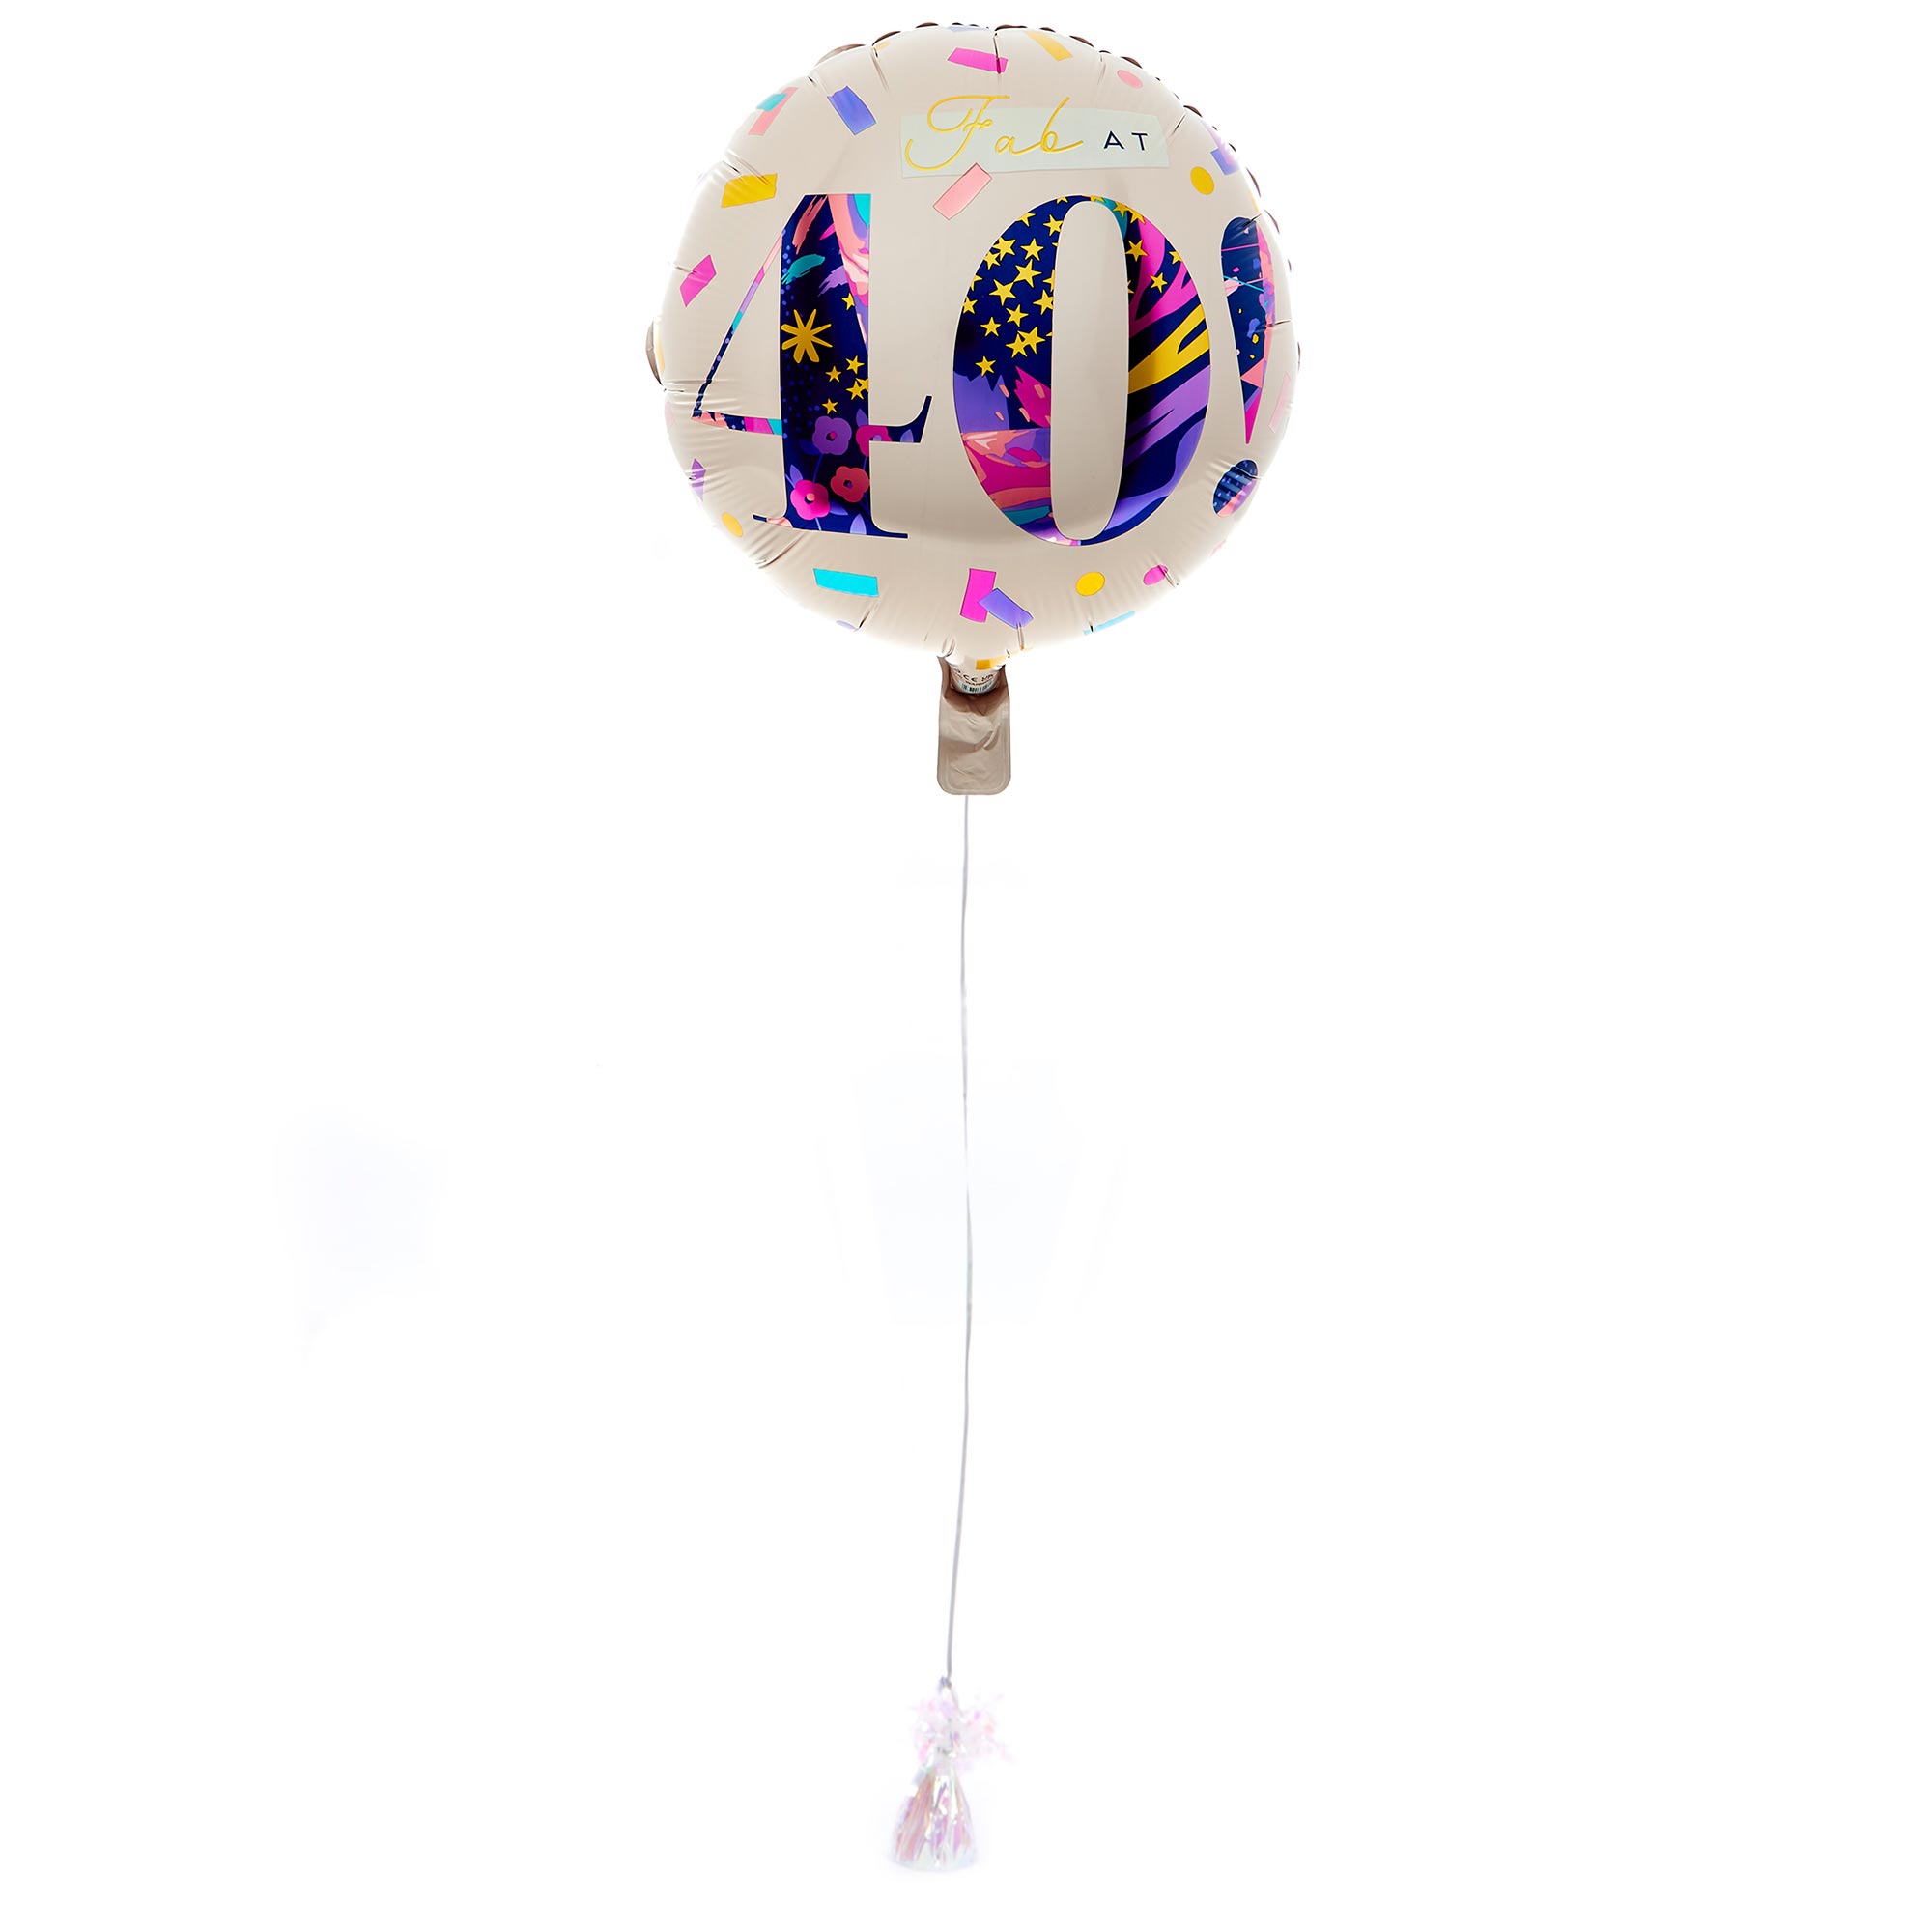 Fab 40th Birthday Balloon & Lindt Chocolate Box - FREE GIFT CARD!